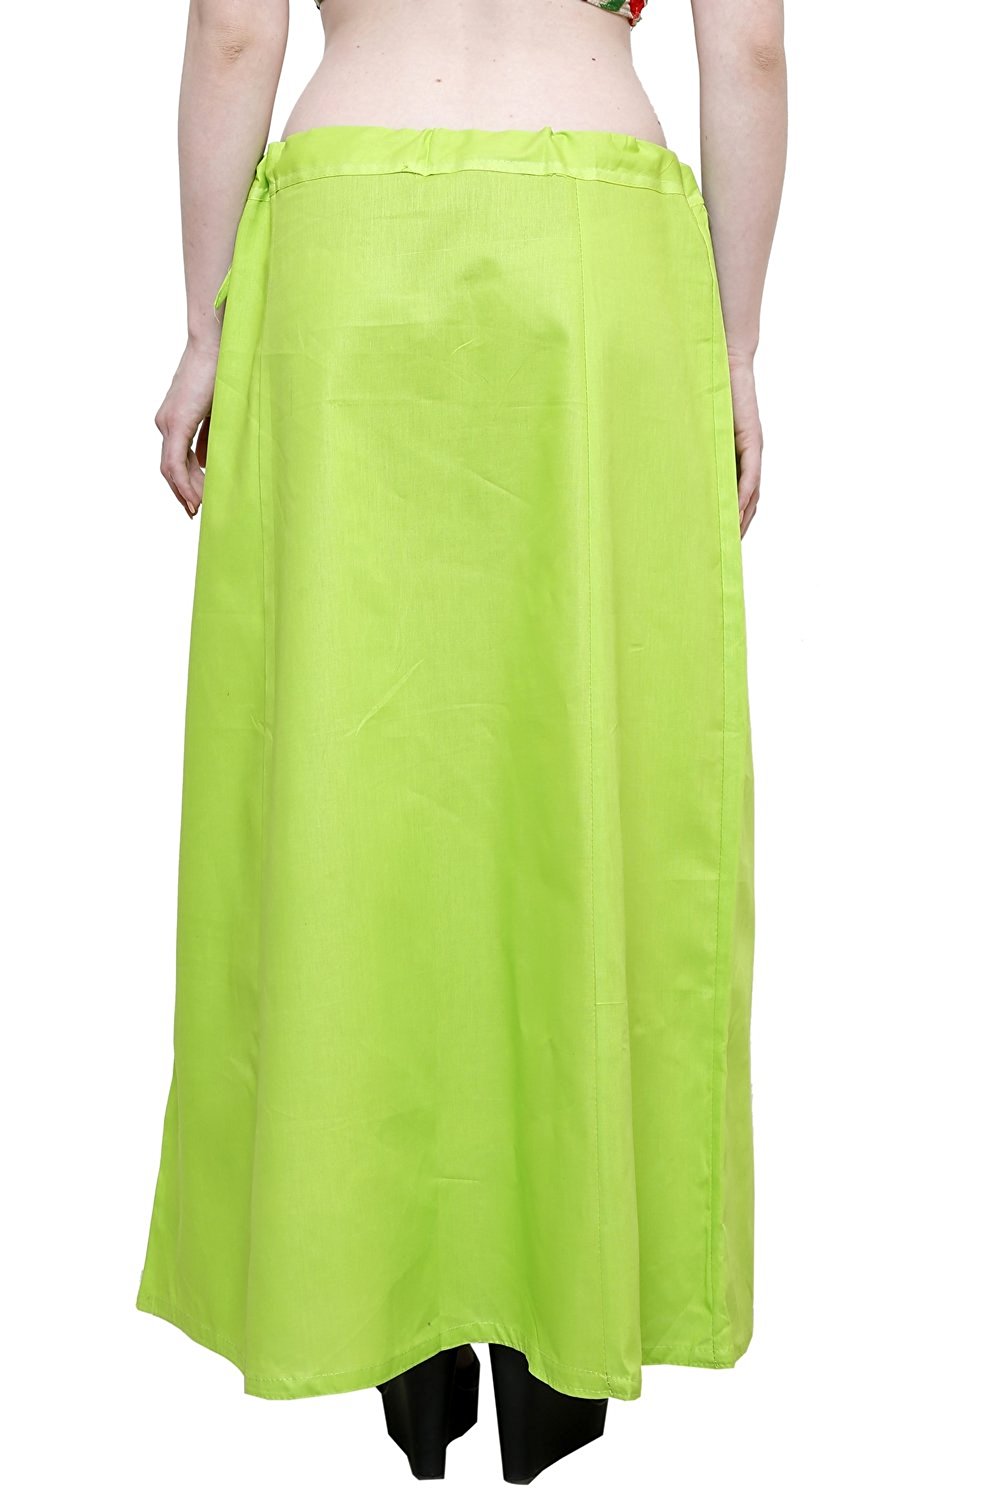 Stylesindia Women's Cotton Readymade Indian Inskirt Saree petticoats Underskirt - Free Size-Lime green